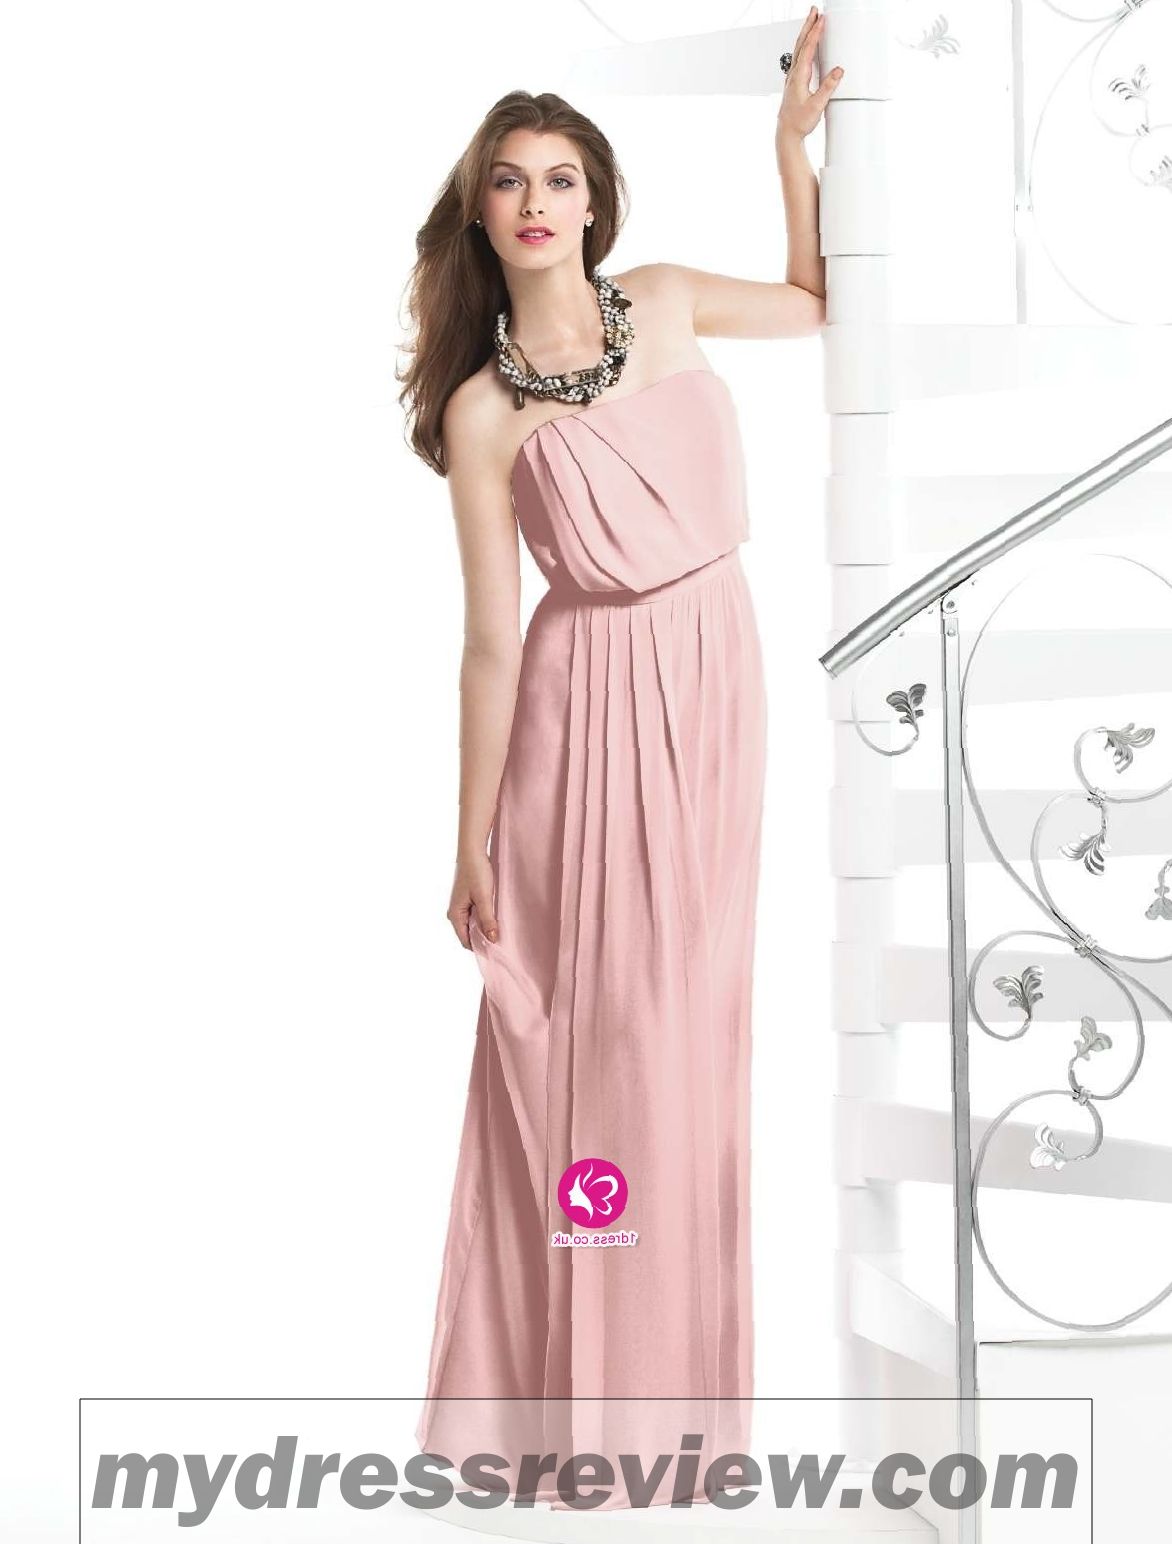 Floor Length Strapless Dress & Clothing Brand Reviews